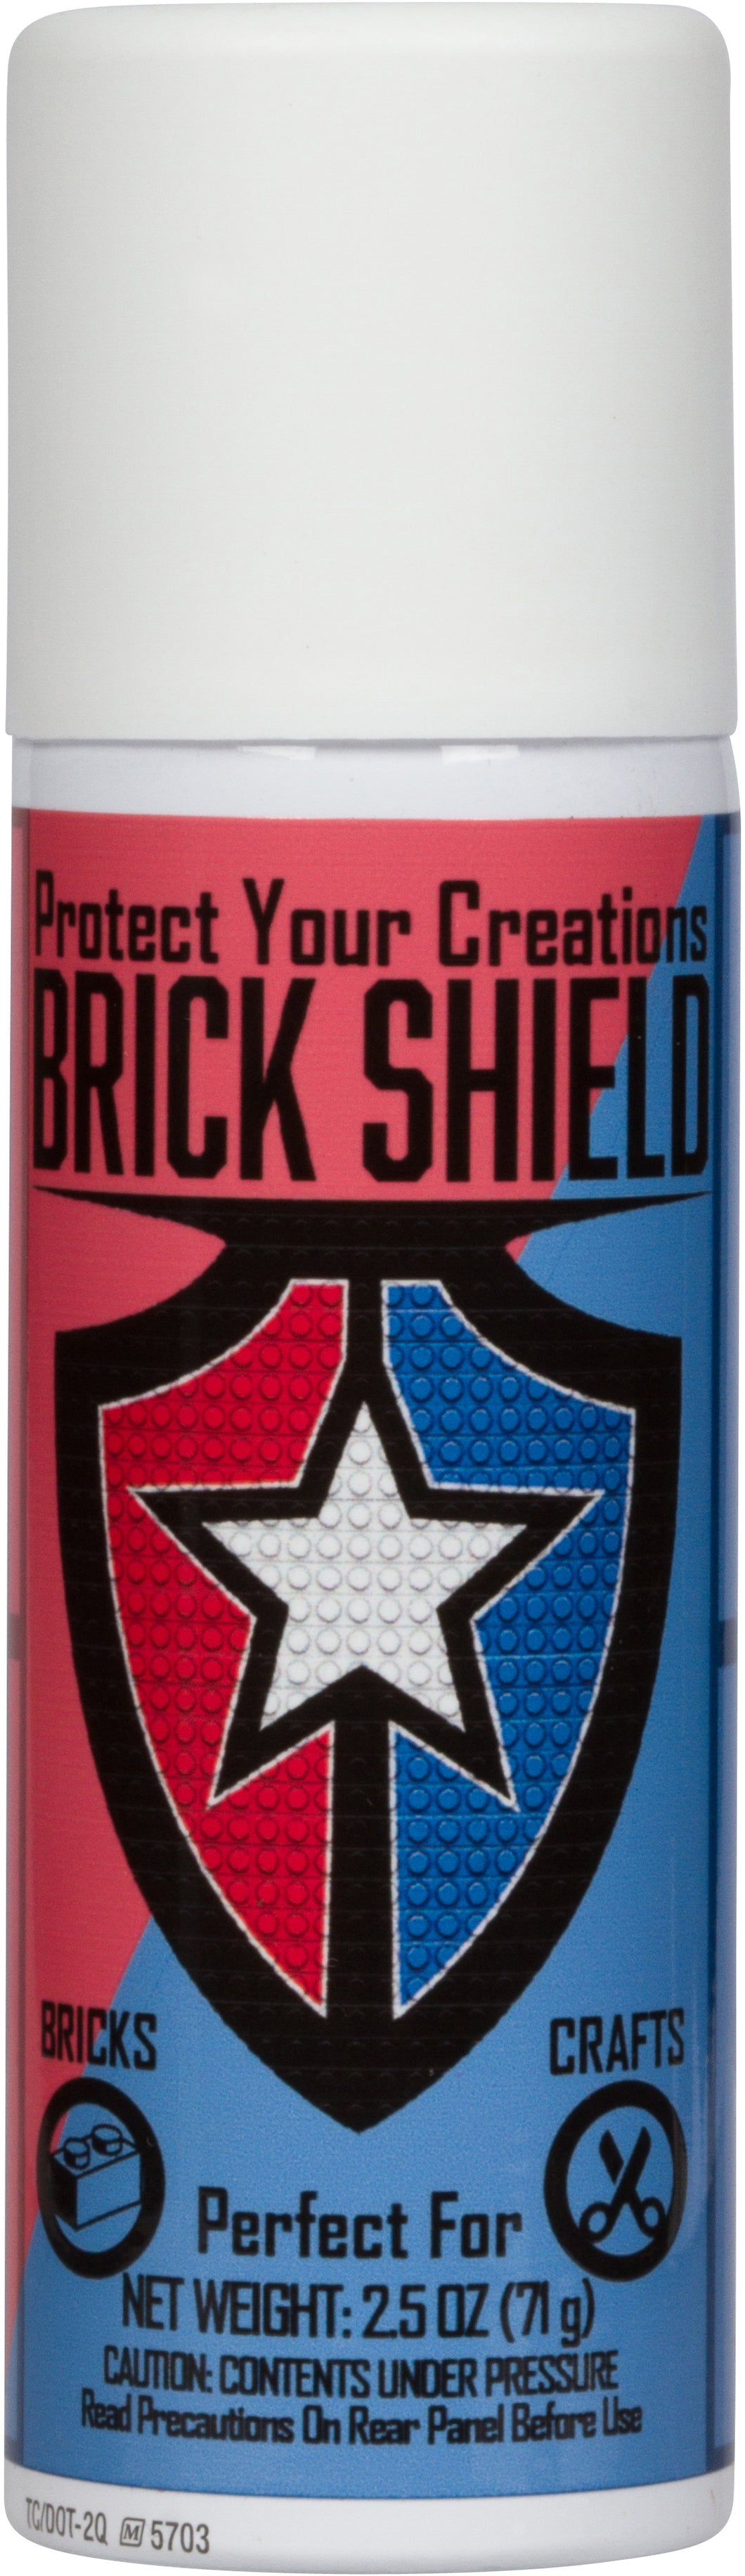 Brick Shield